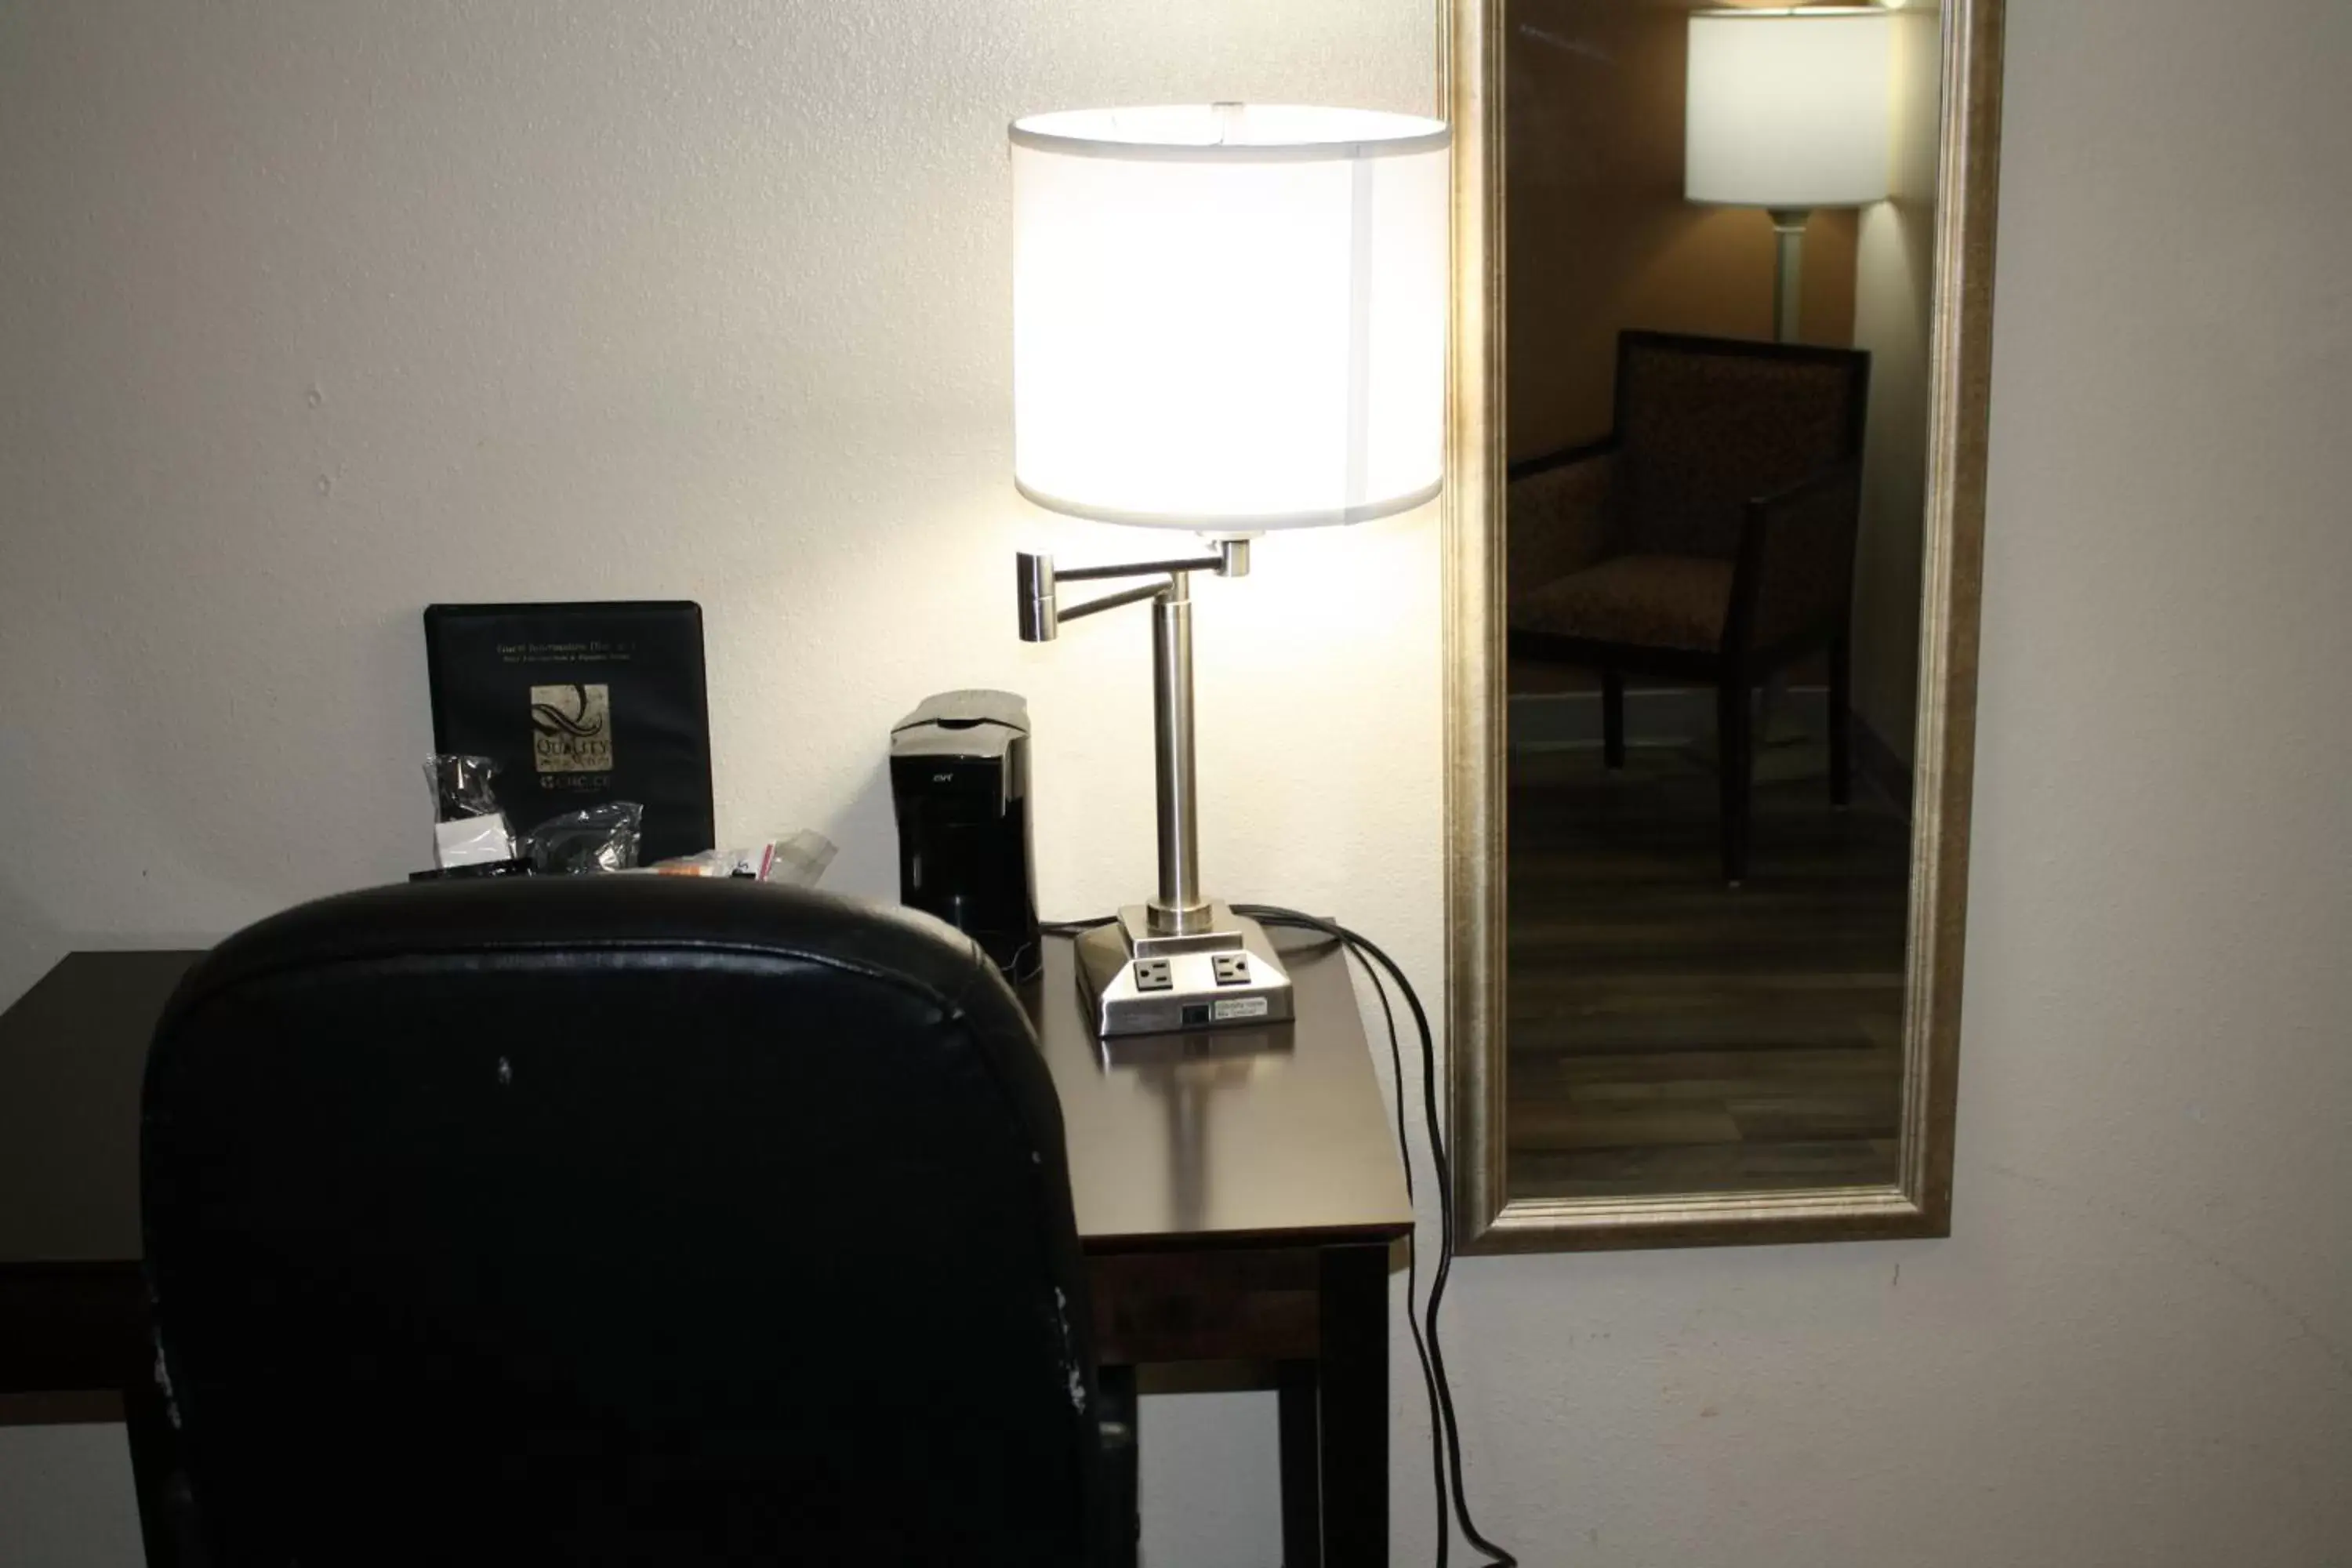 Bedroom in Quality Inn & Suites Wichita Falls I-44